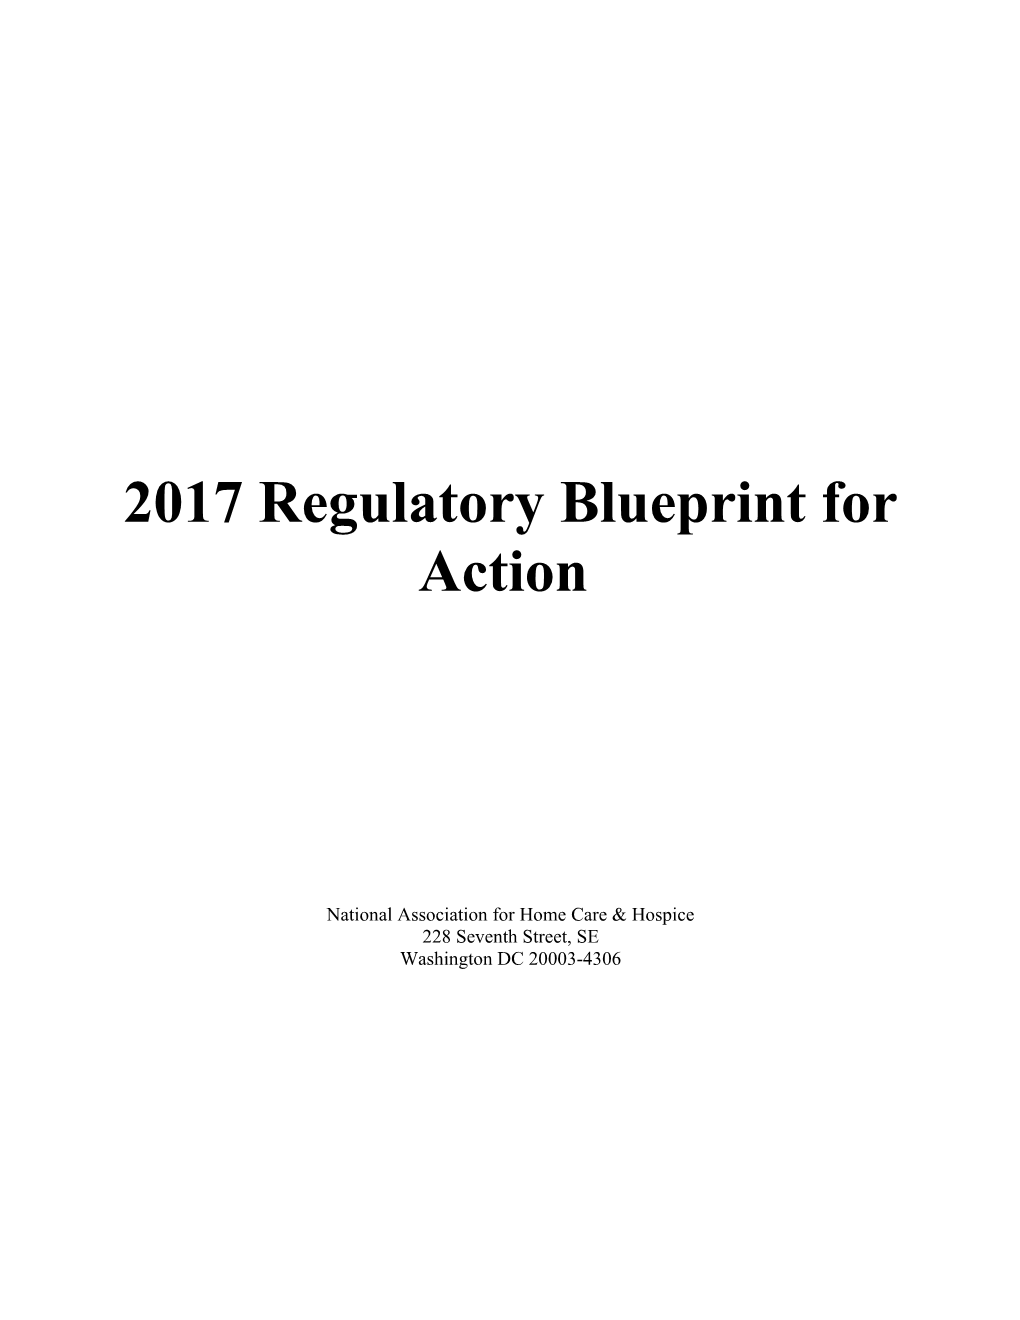 2017 Regulatory Blueprint for Action